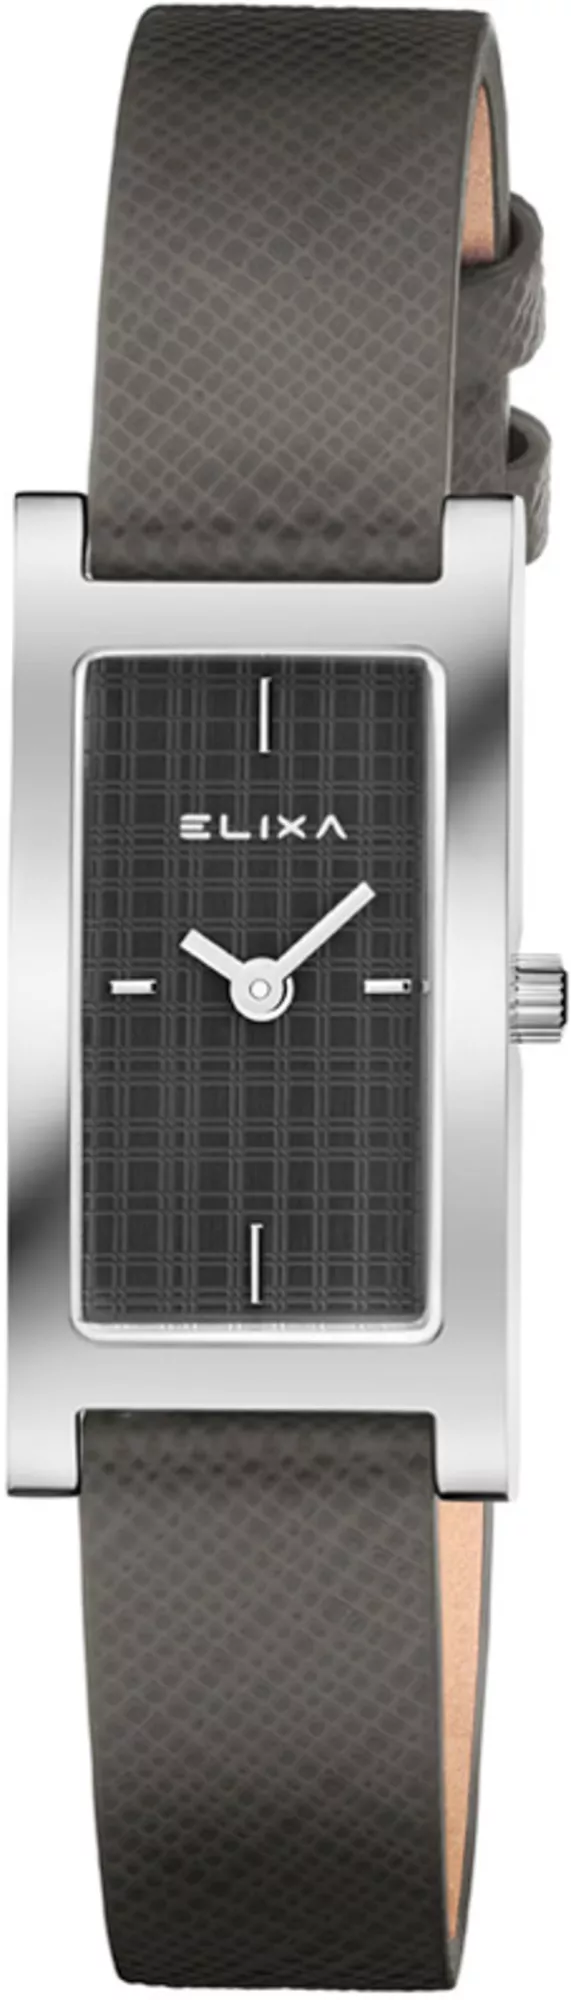 Часы Elixa E105-L418